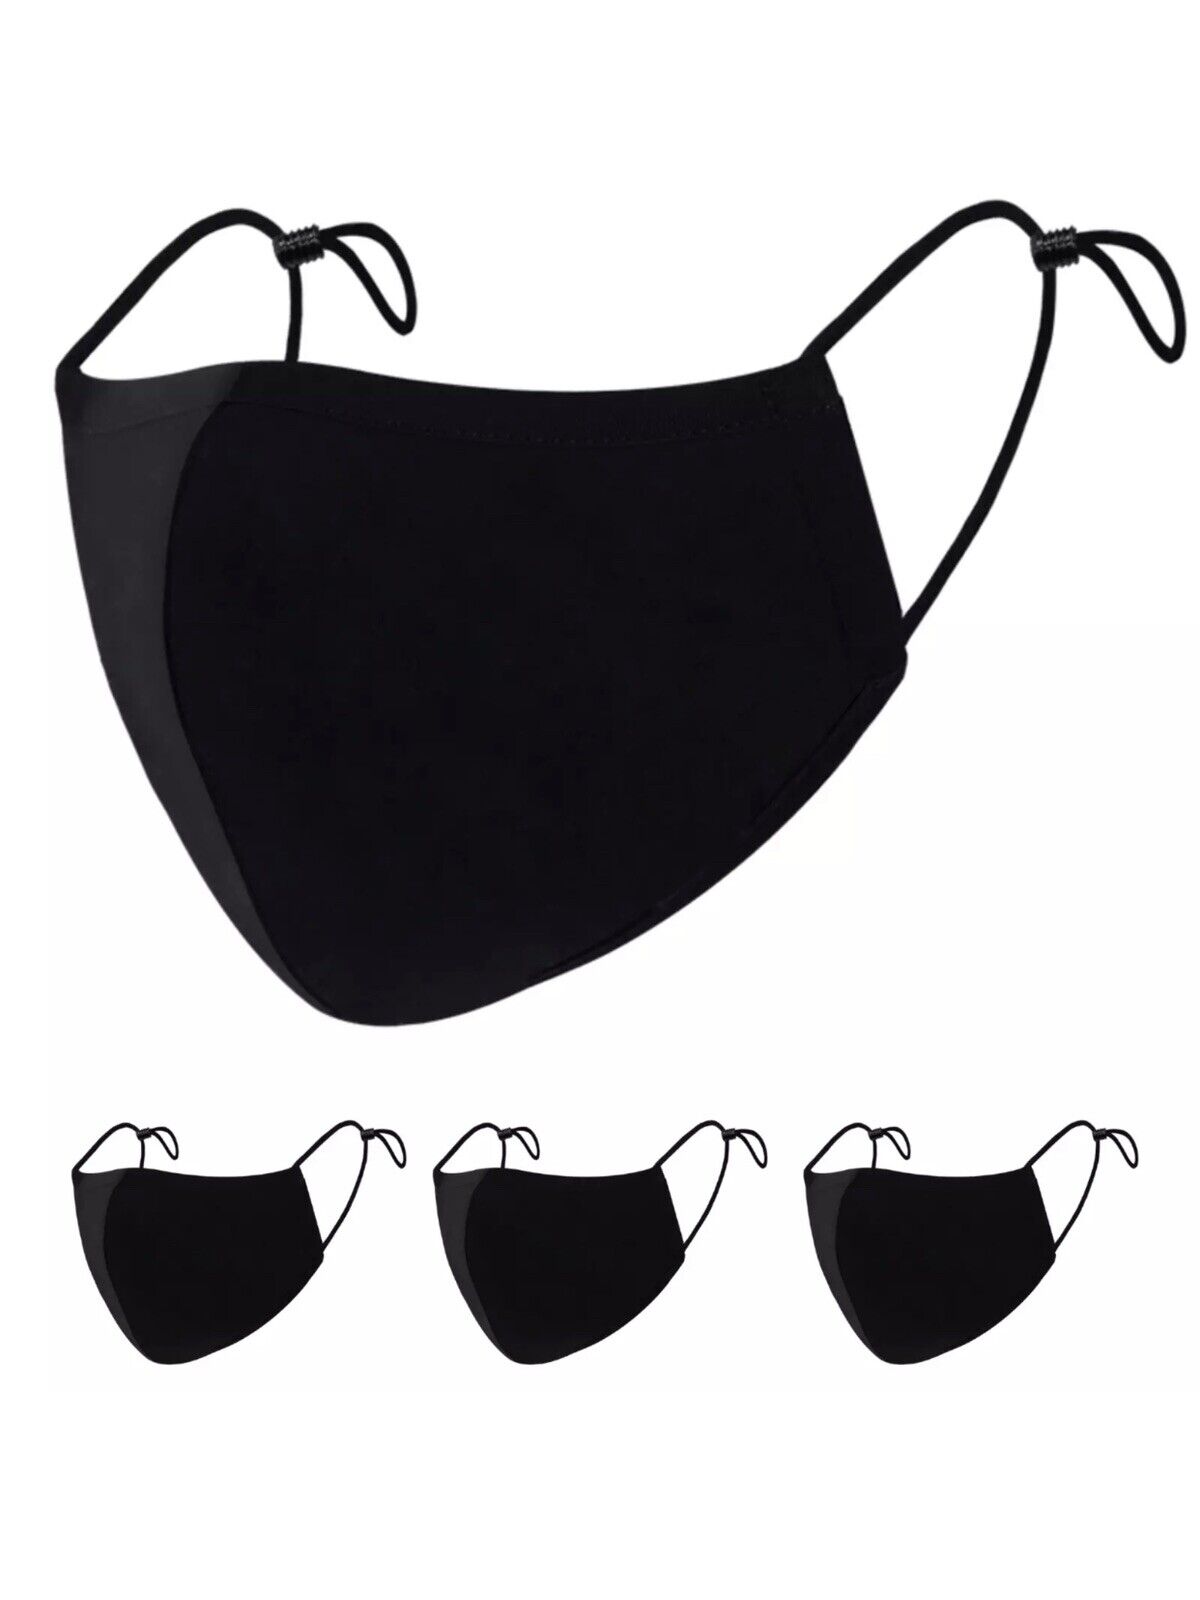 8 Face Masks Black Cotton Adult Mask Adjustable Elastic Loops Washable Reusable Unbranded - фотография #3